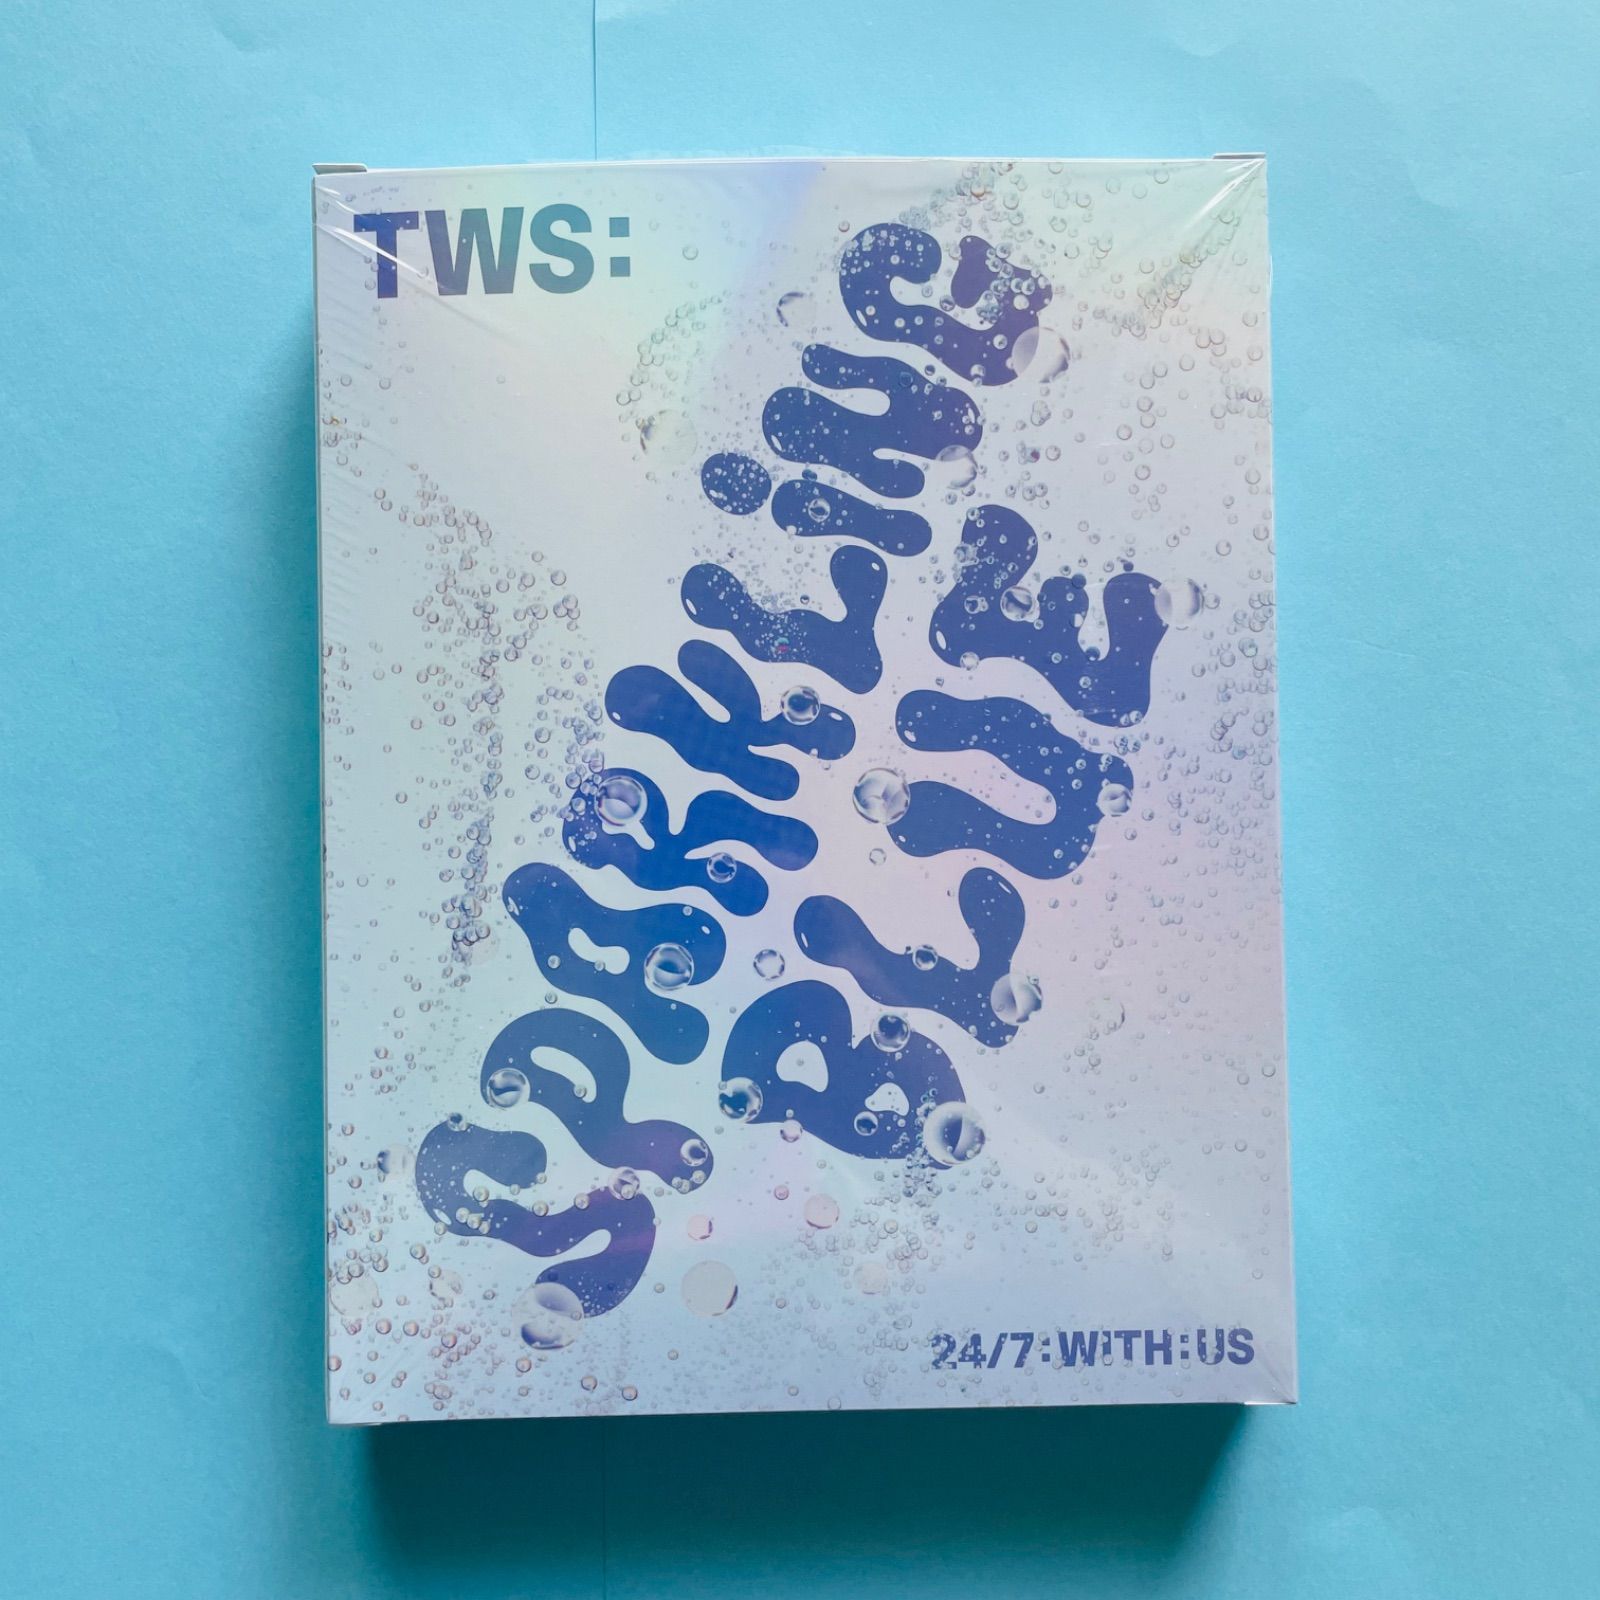 TWS CD Sparkling Blue 開封済み - メルカリ